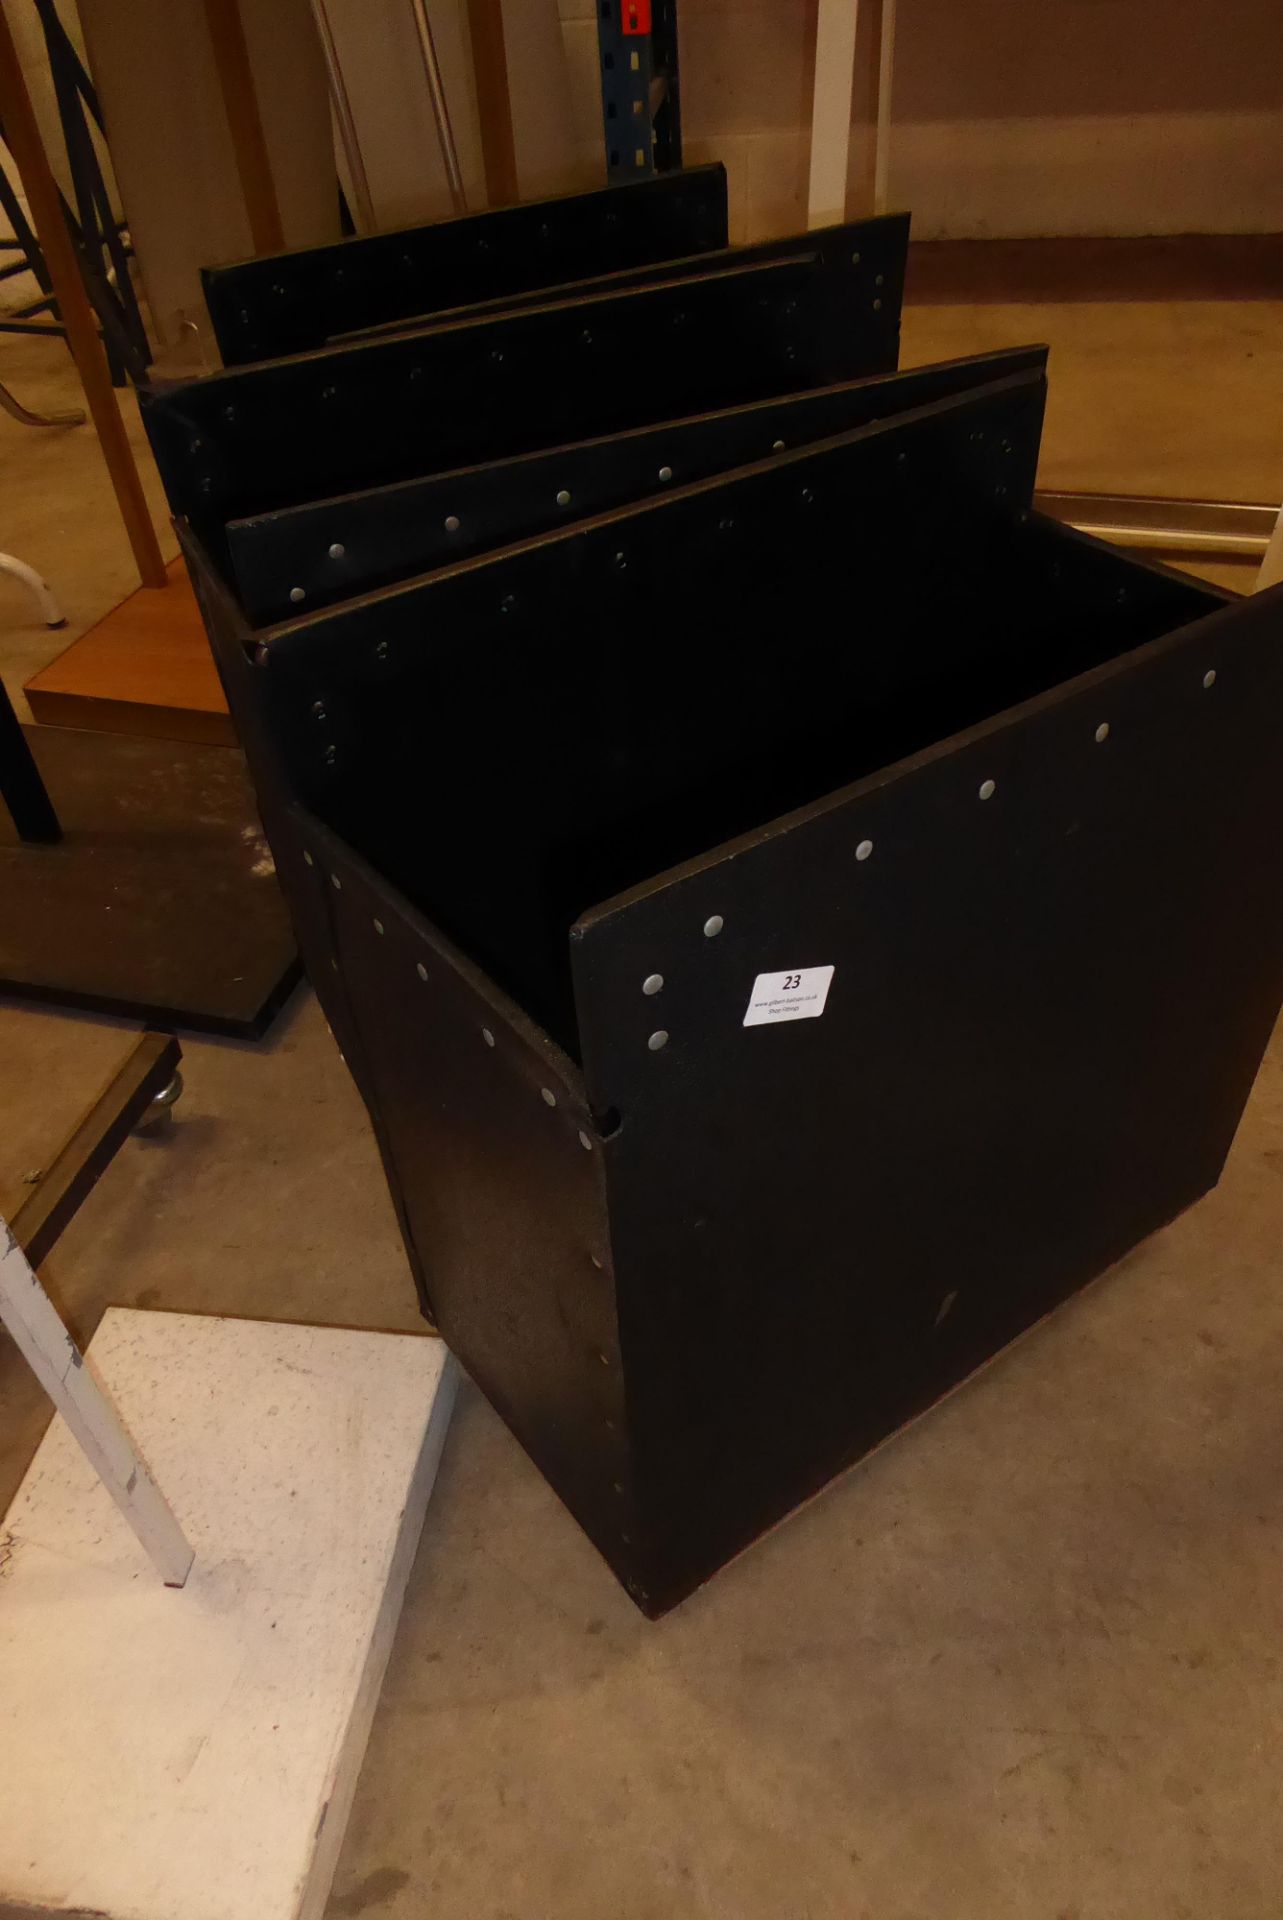 * Three mobile black caddy bins 500 x 250 x 600